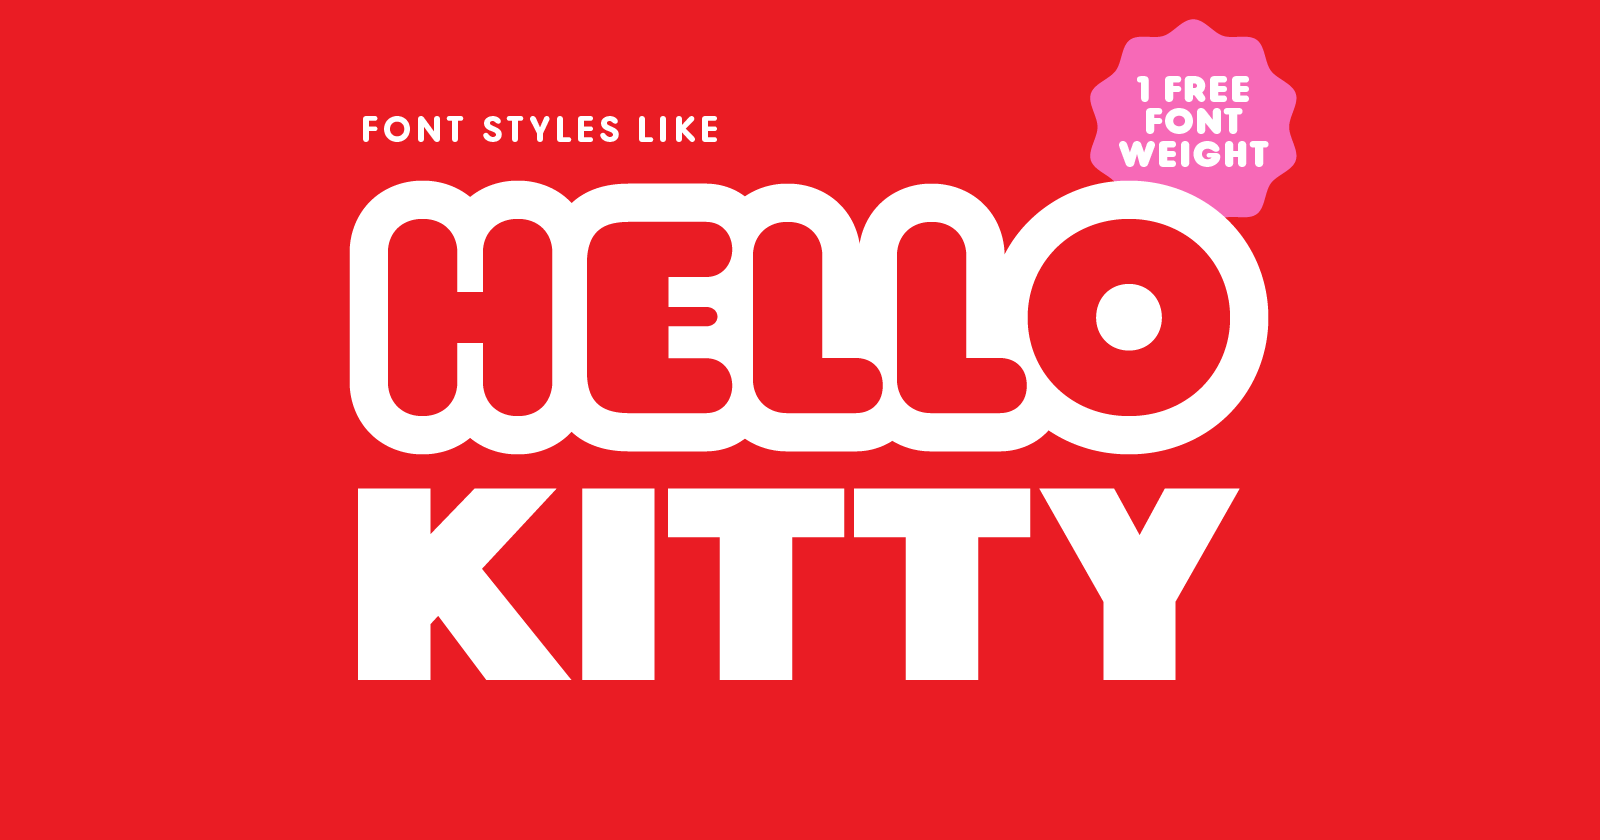 Hello Kitty style fonts